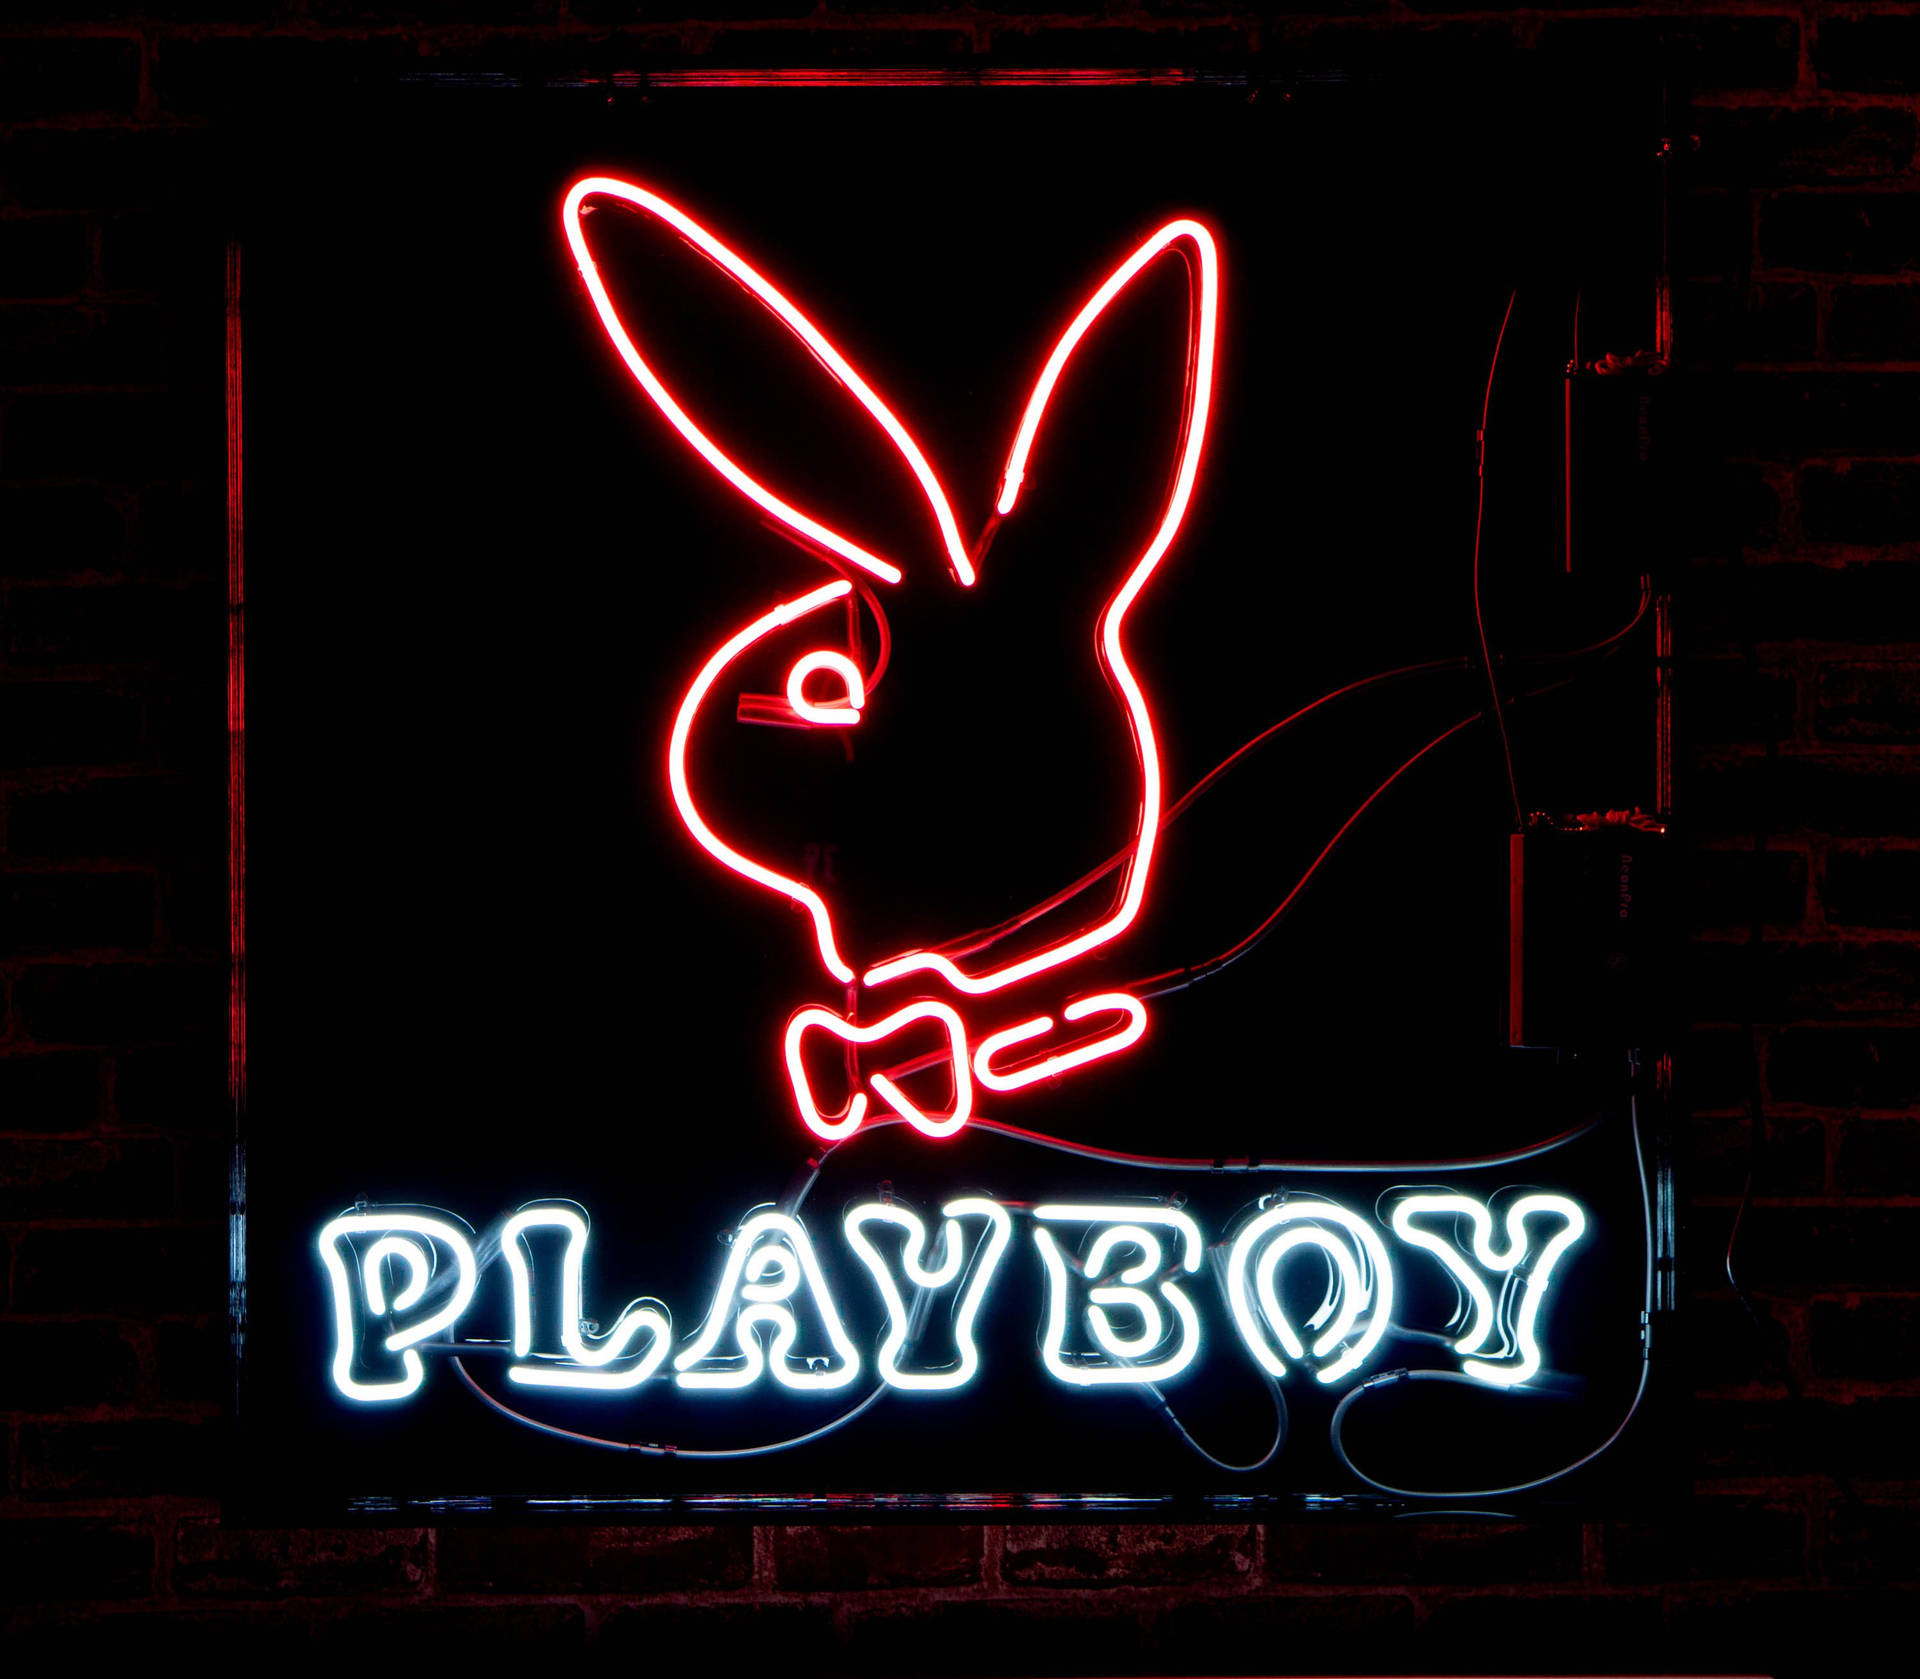 Playboy-logo Wallpaper